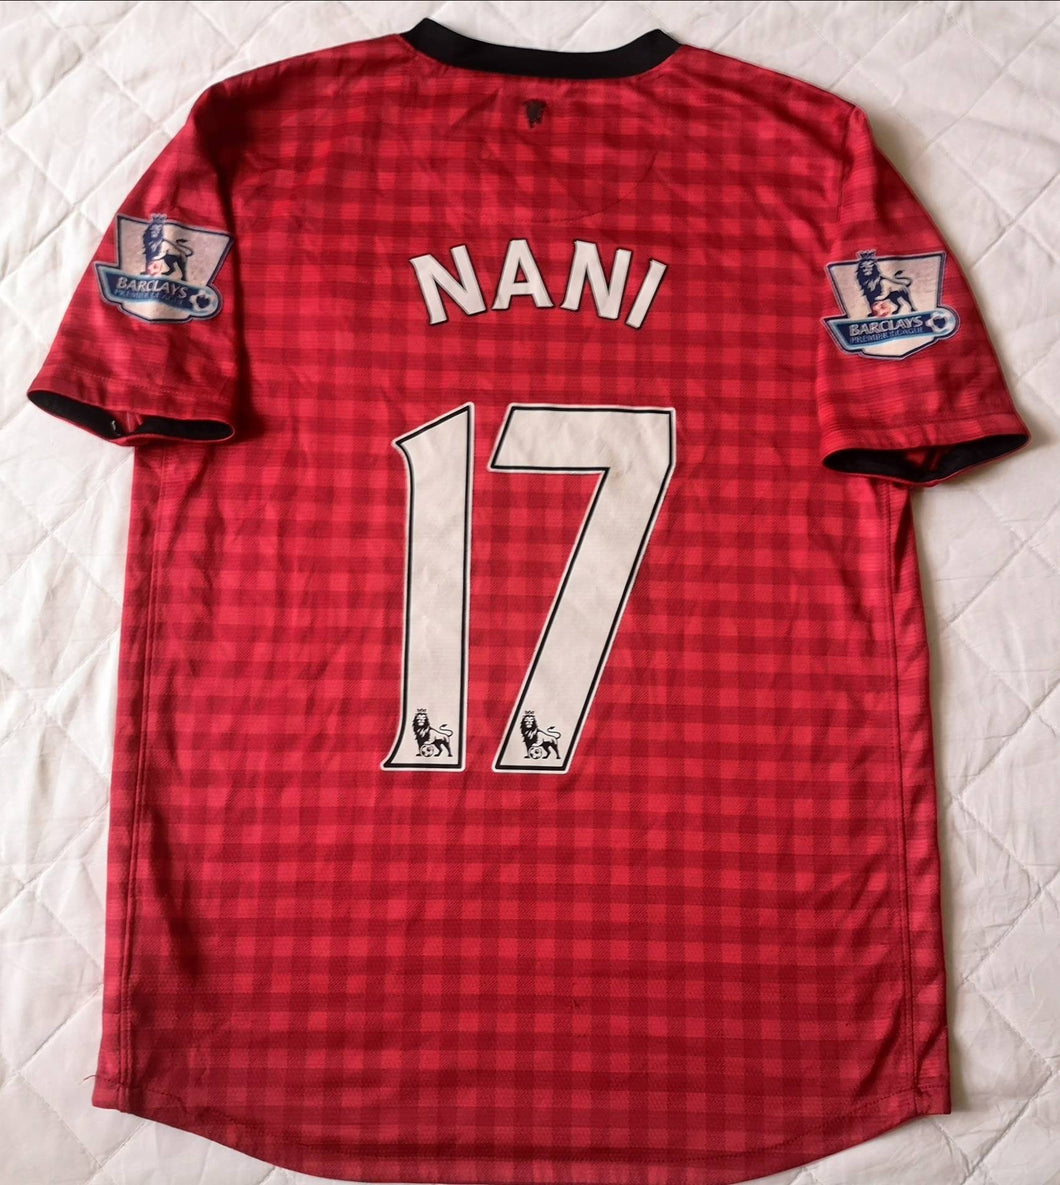 Jersey Nani #17 Manchester United 2012-2013 home